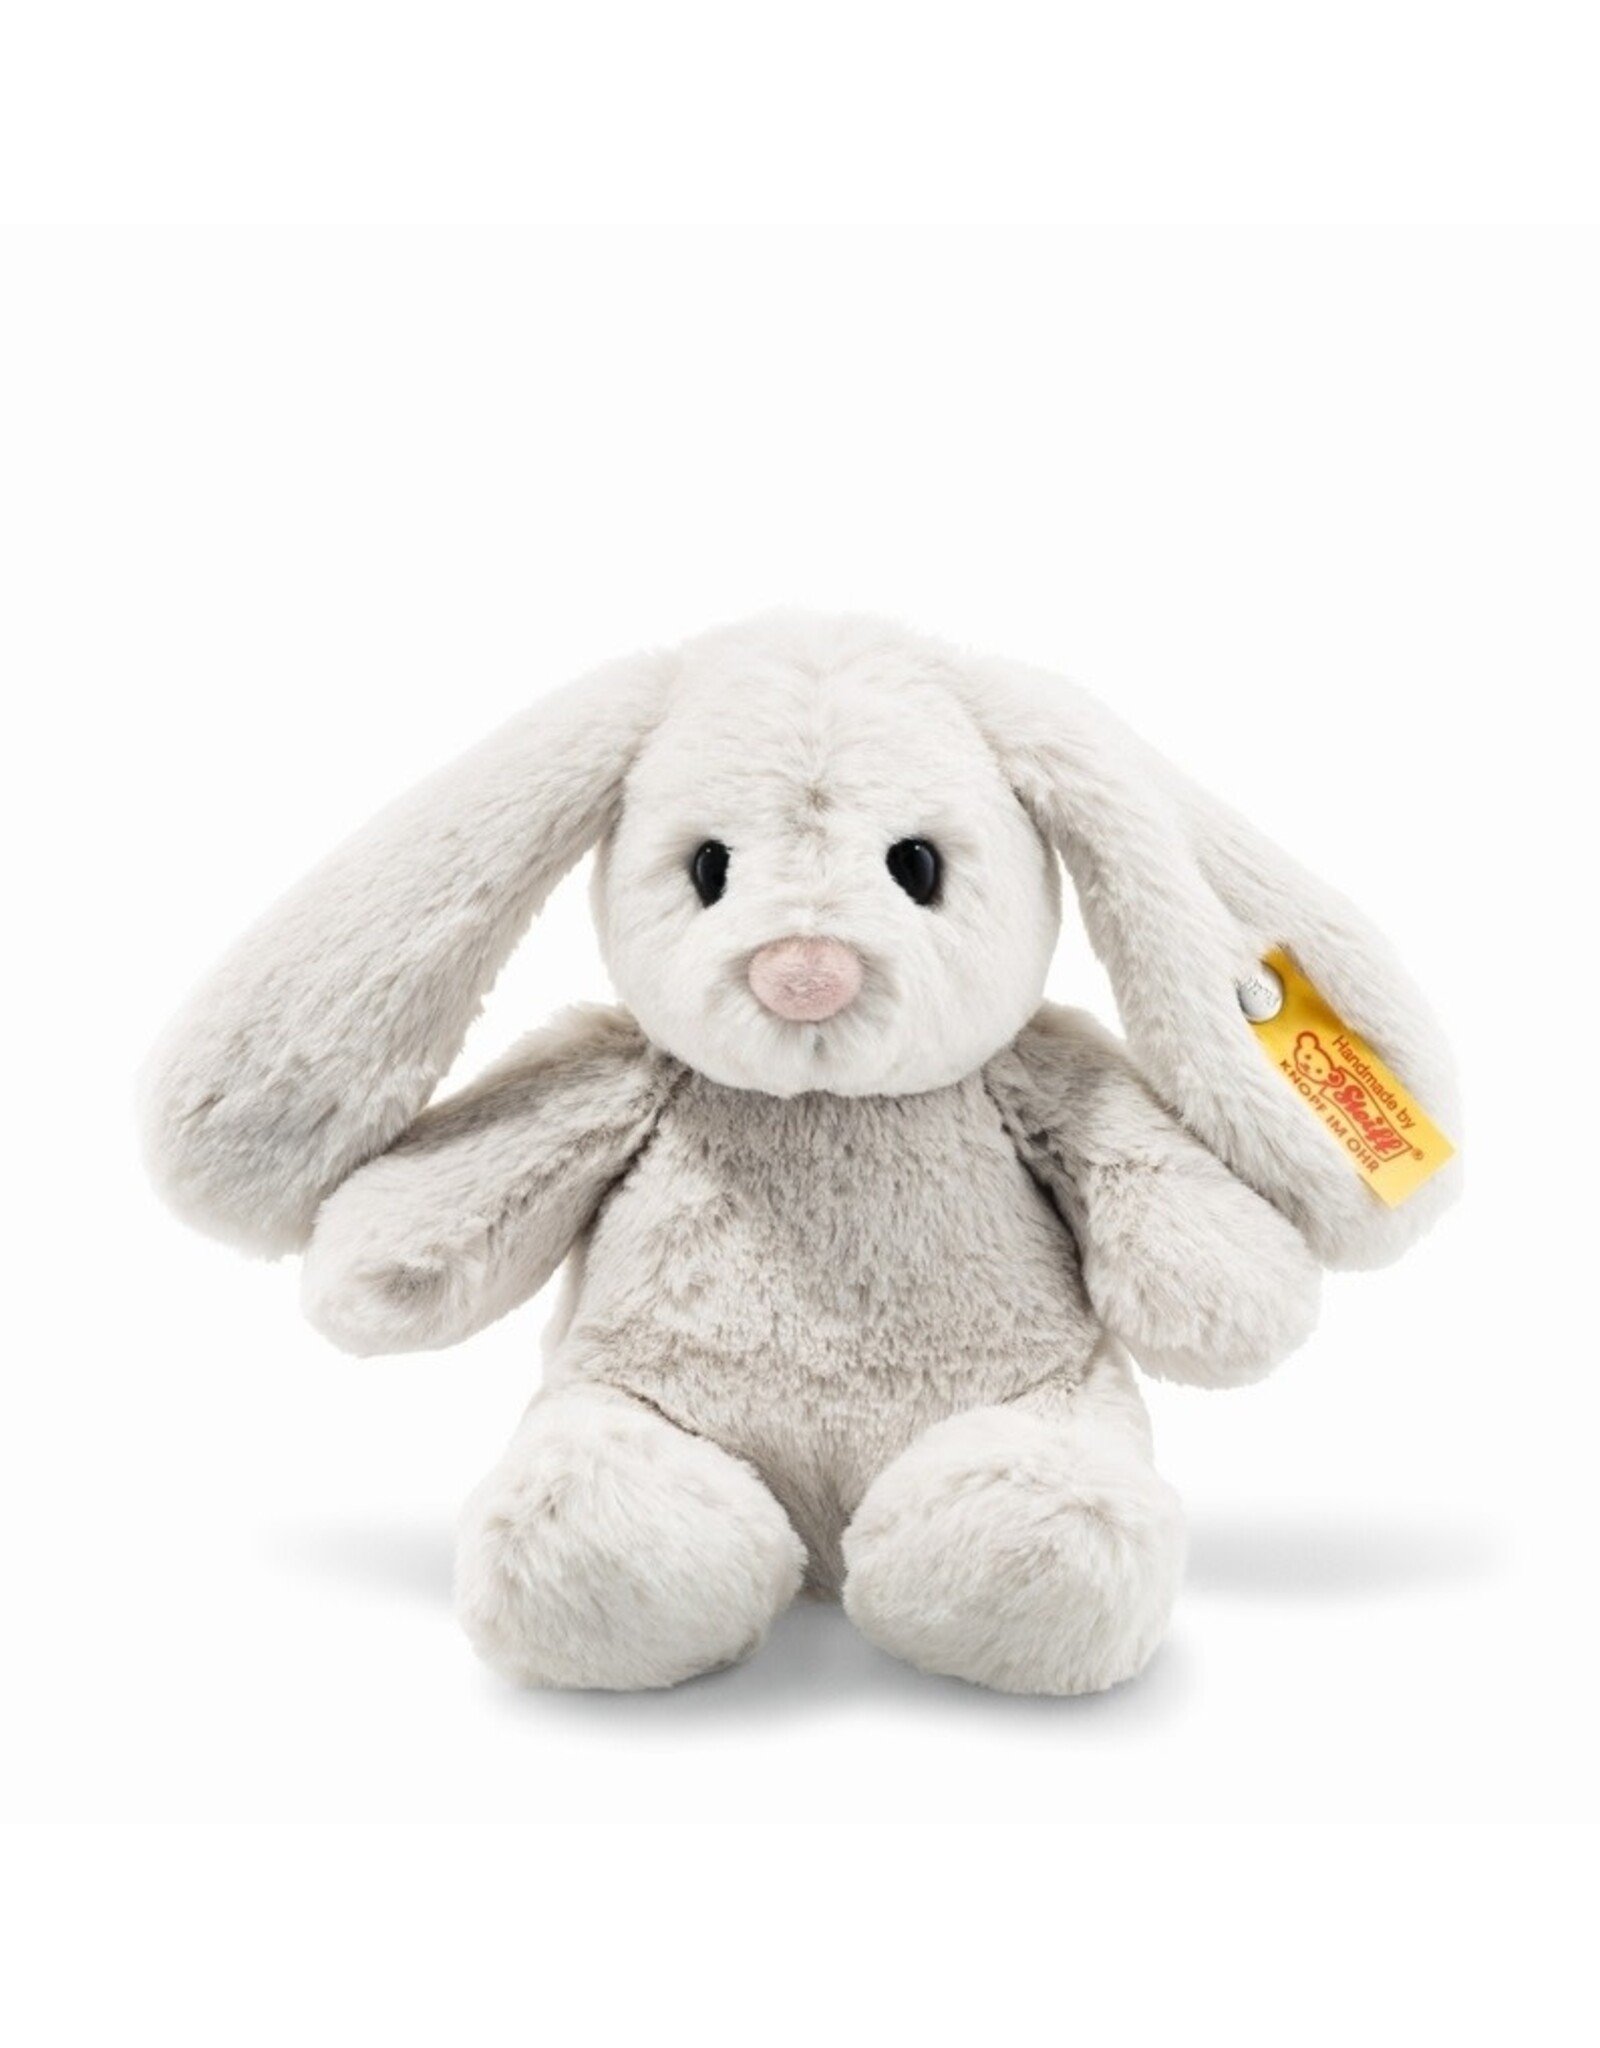 Steiff 7 in. Hoppie Bunny Rabbit Plush Stuffed Toy